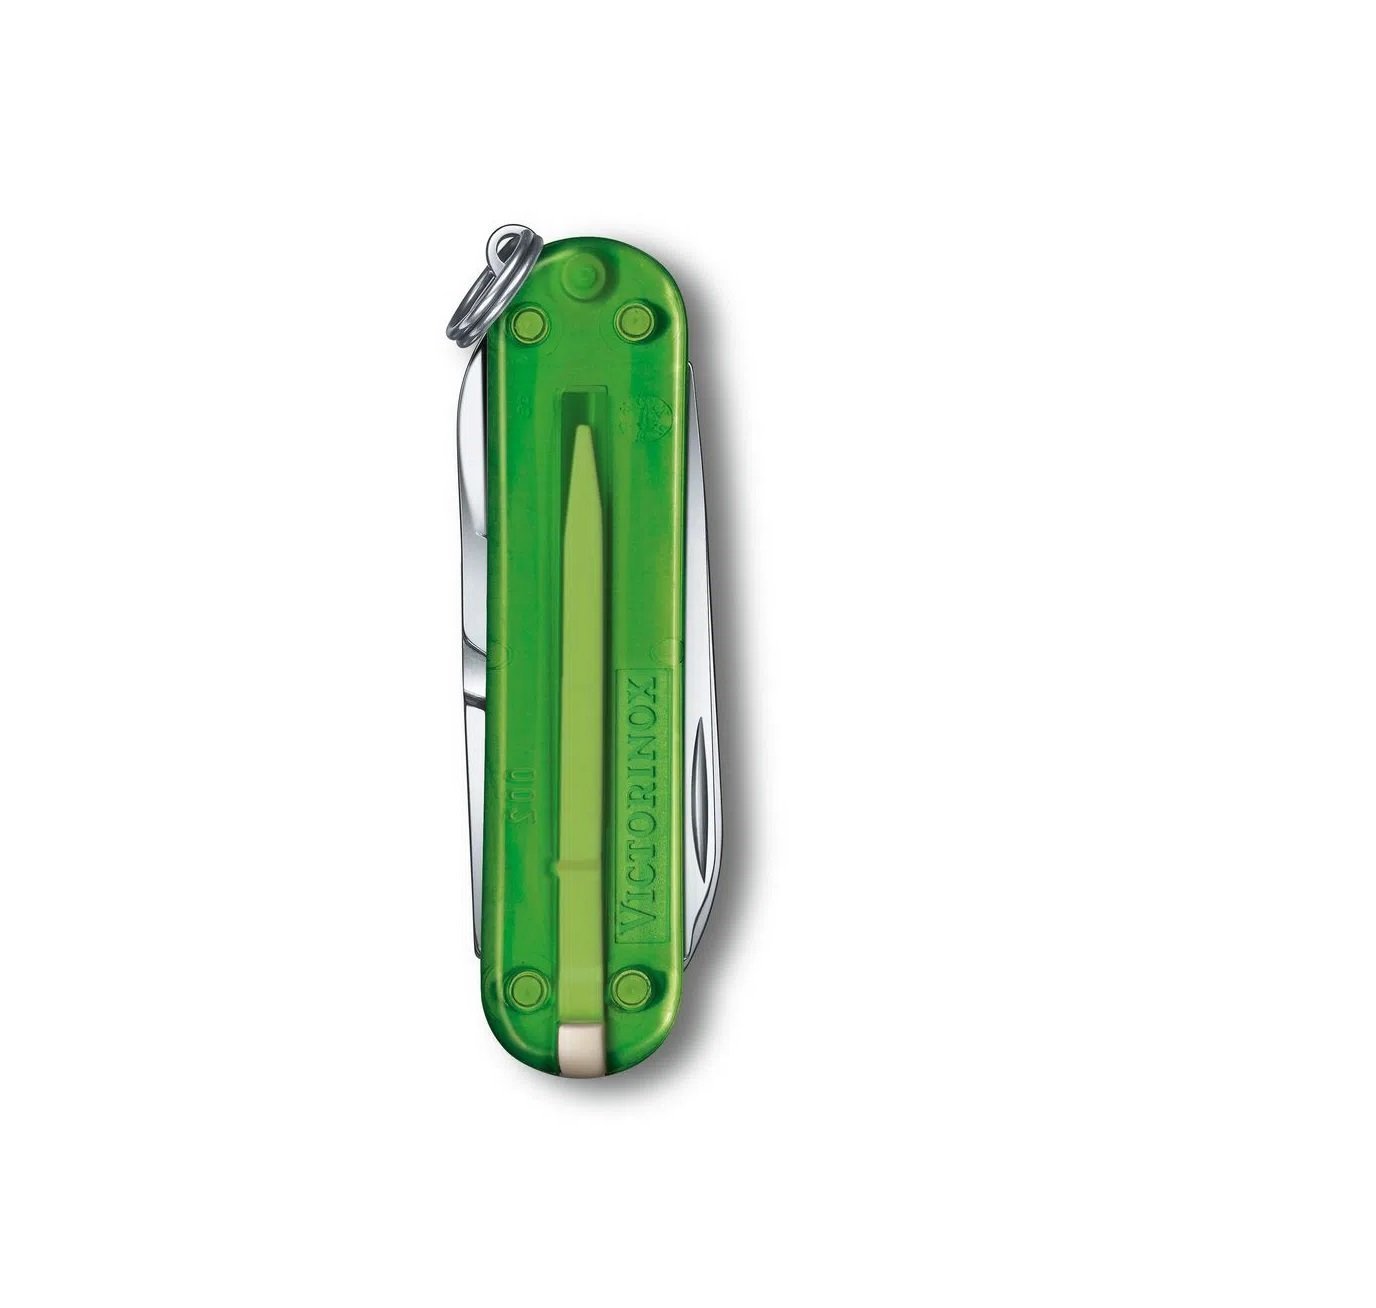 Mini Canivete Suíço Classic 7 funções SD Colors Verde Green Tea Victorinox - 3